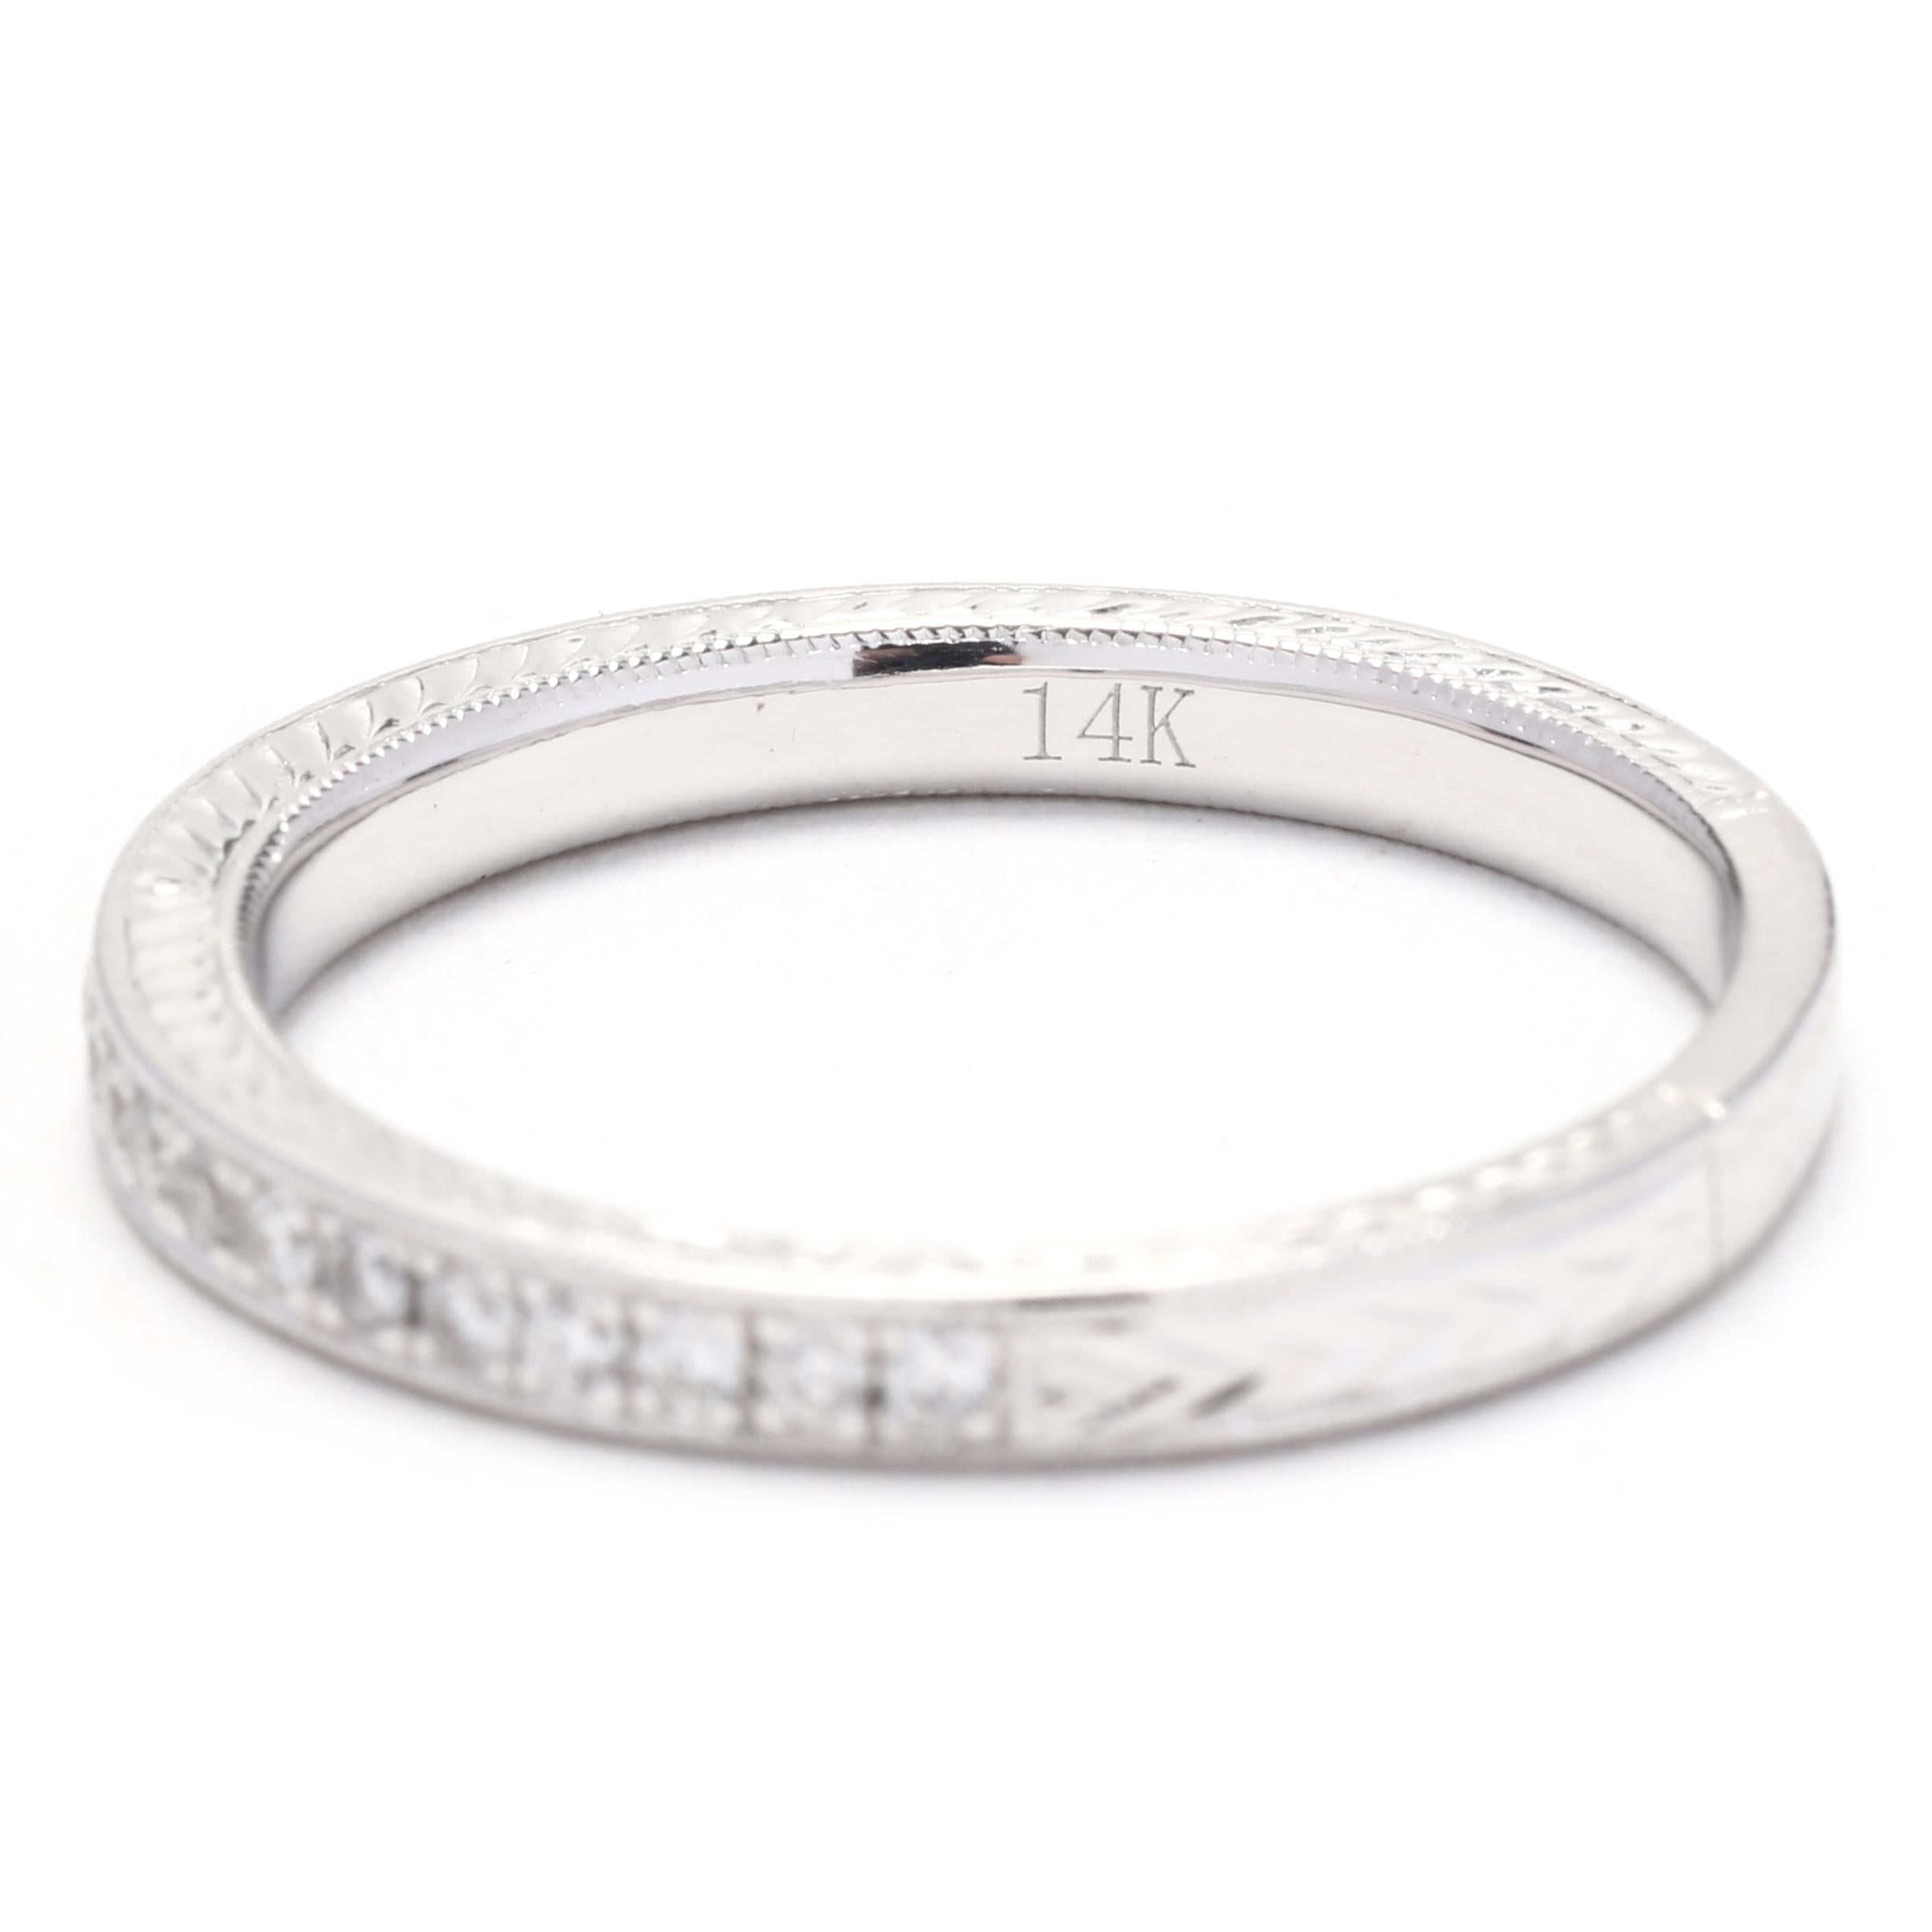 Women's or Men's Engraved Diamond Wedding Band, 14K White Gold, Ring Size 6.25, Stackable Diamond For Sale